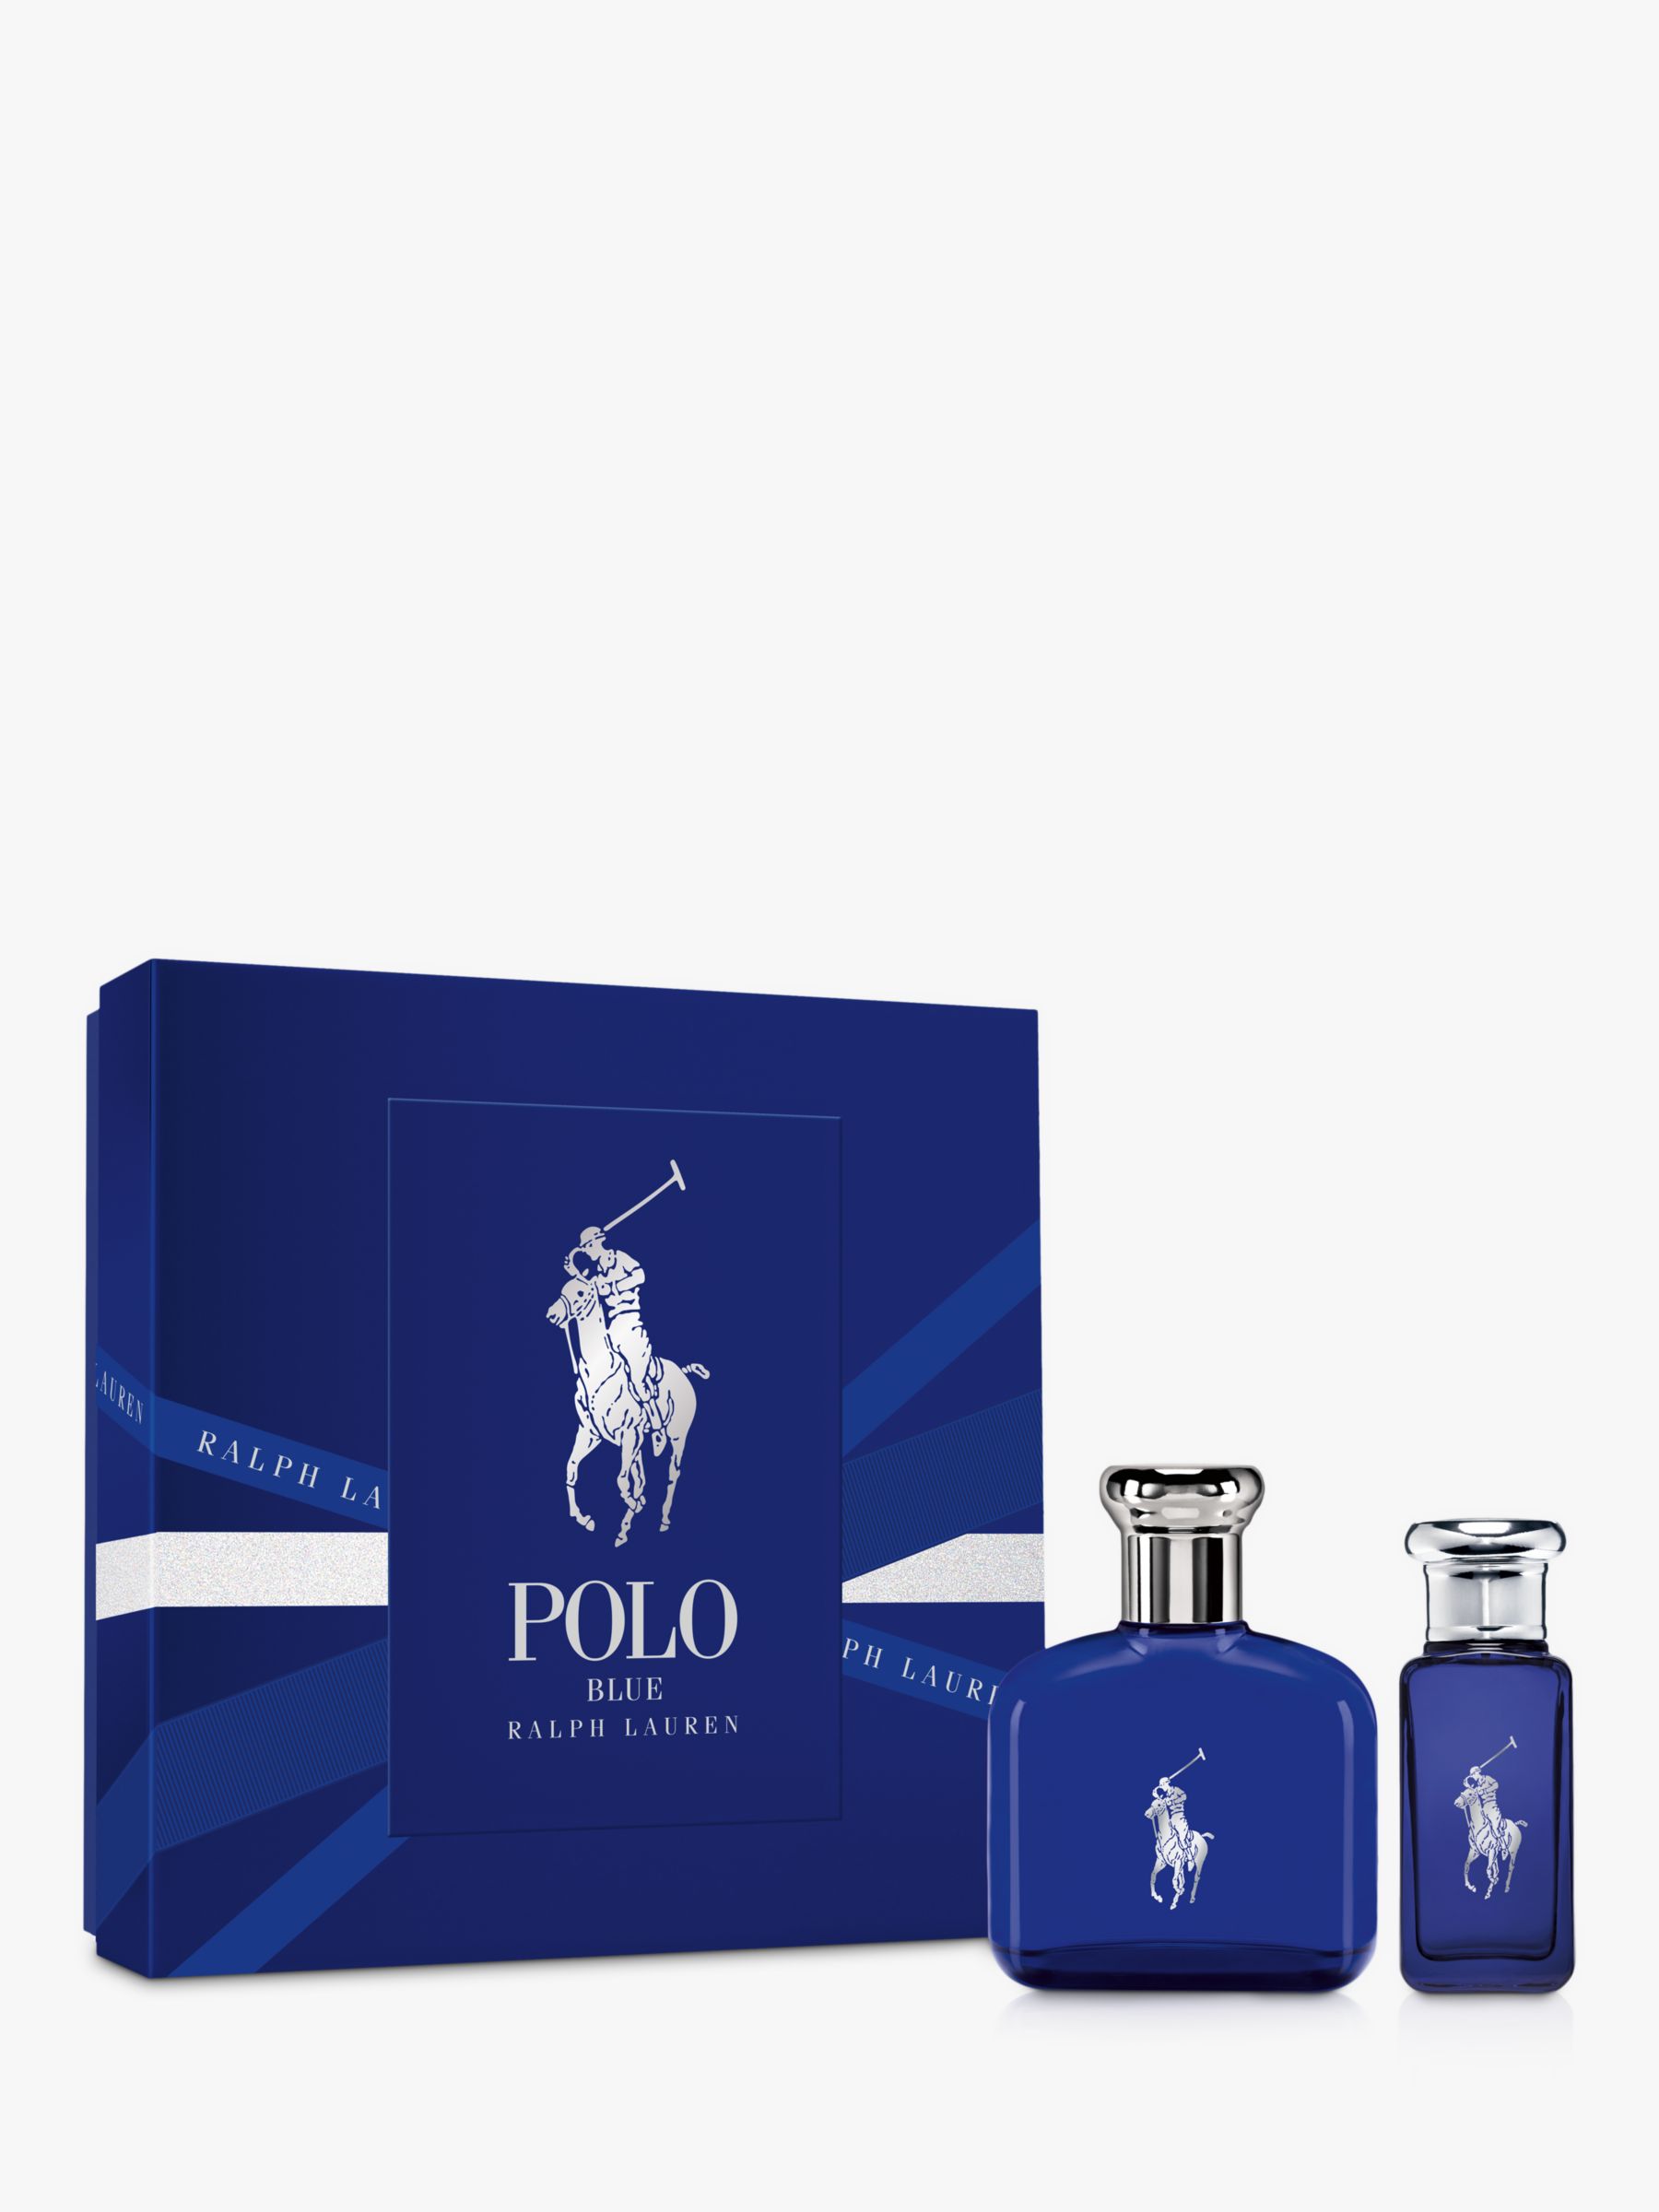 polo blue set